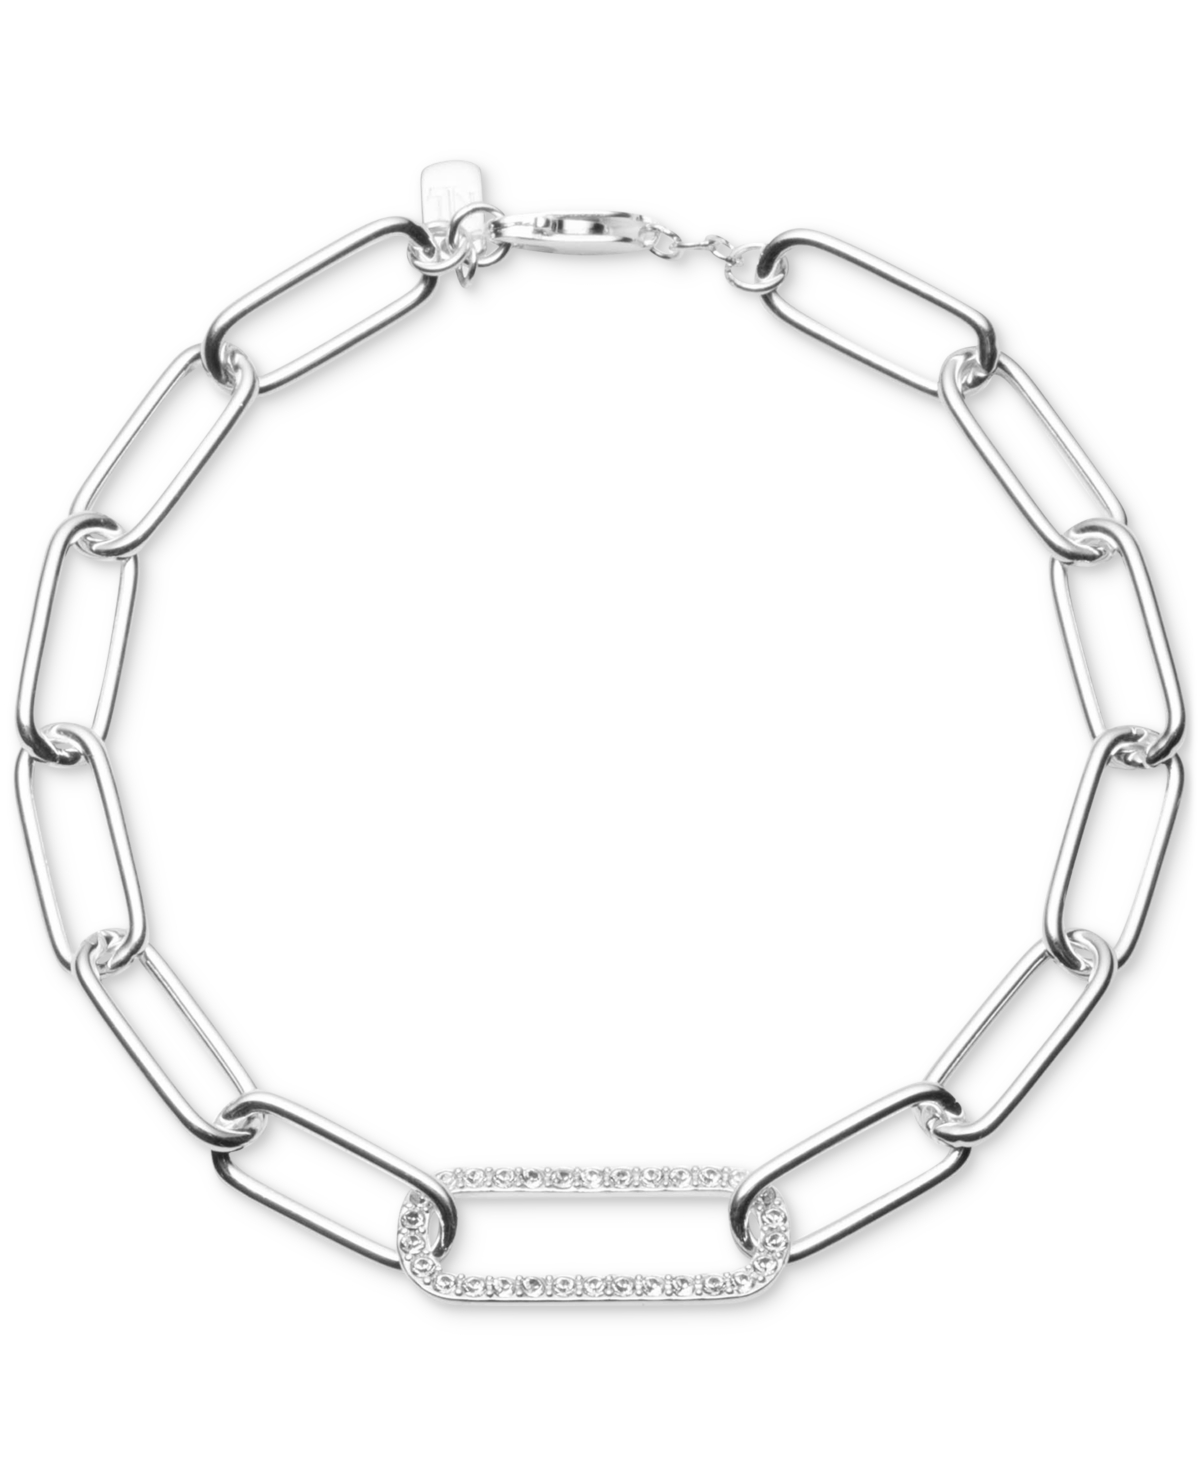 Lauren Ralph Lauren Crystal Pave Open Link Chain Bracelet in Sterling Silver - Sterling Silver